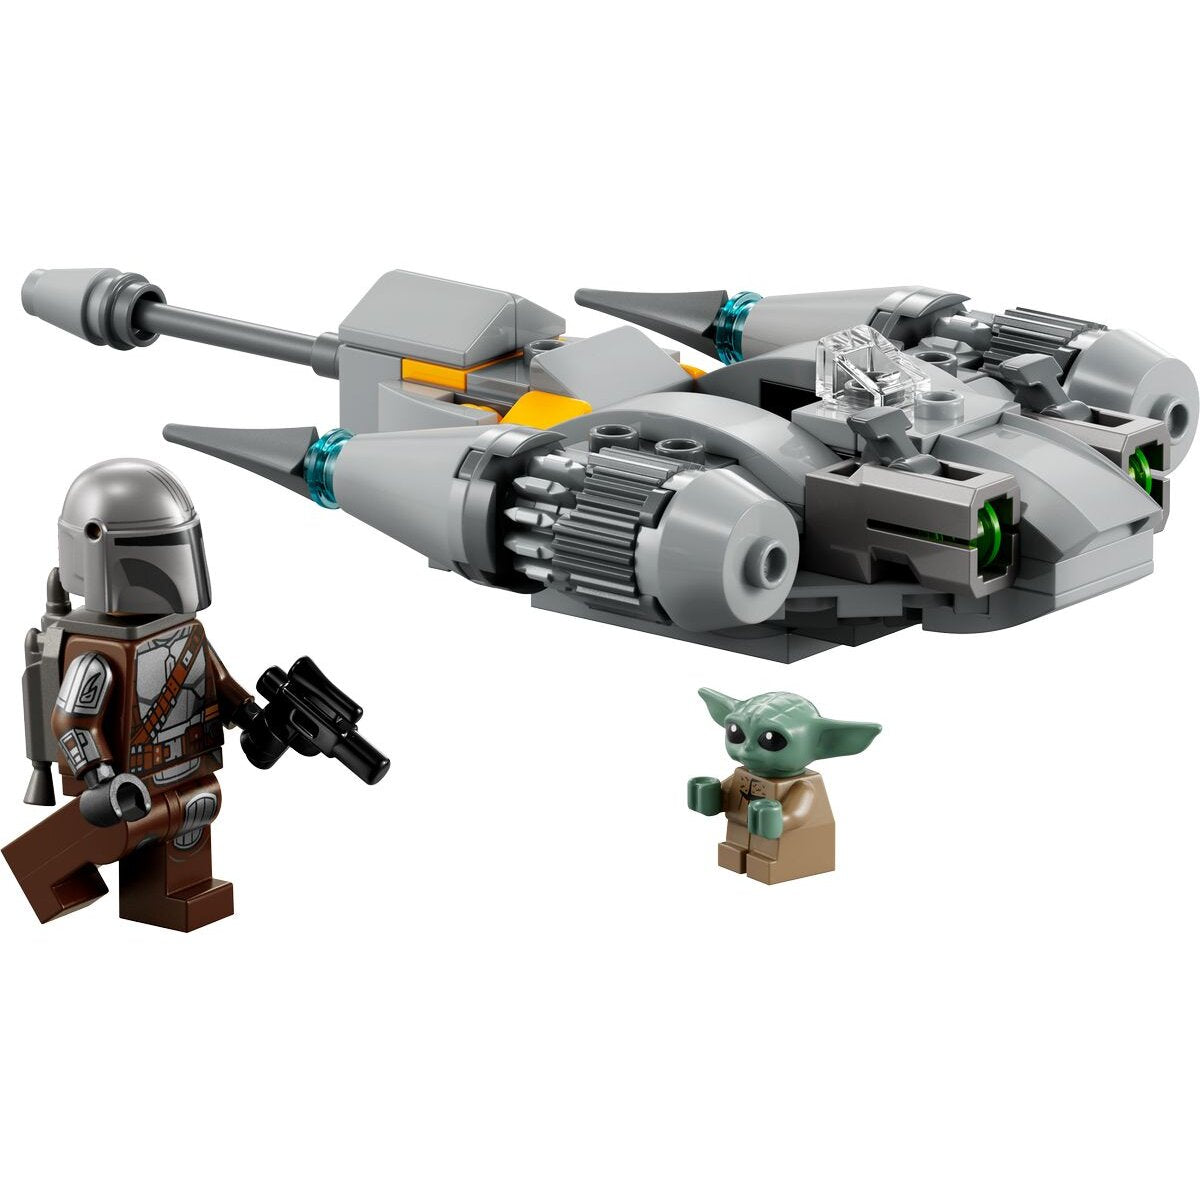 LEGO® Star Wars™ Mandalorian 75363 N-1 Starfighter des Mandalorianers – Microfighter